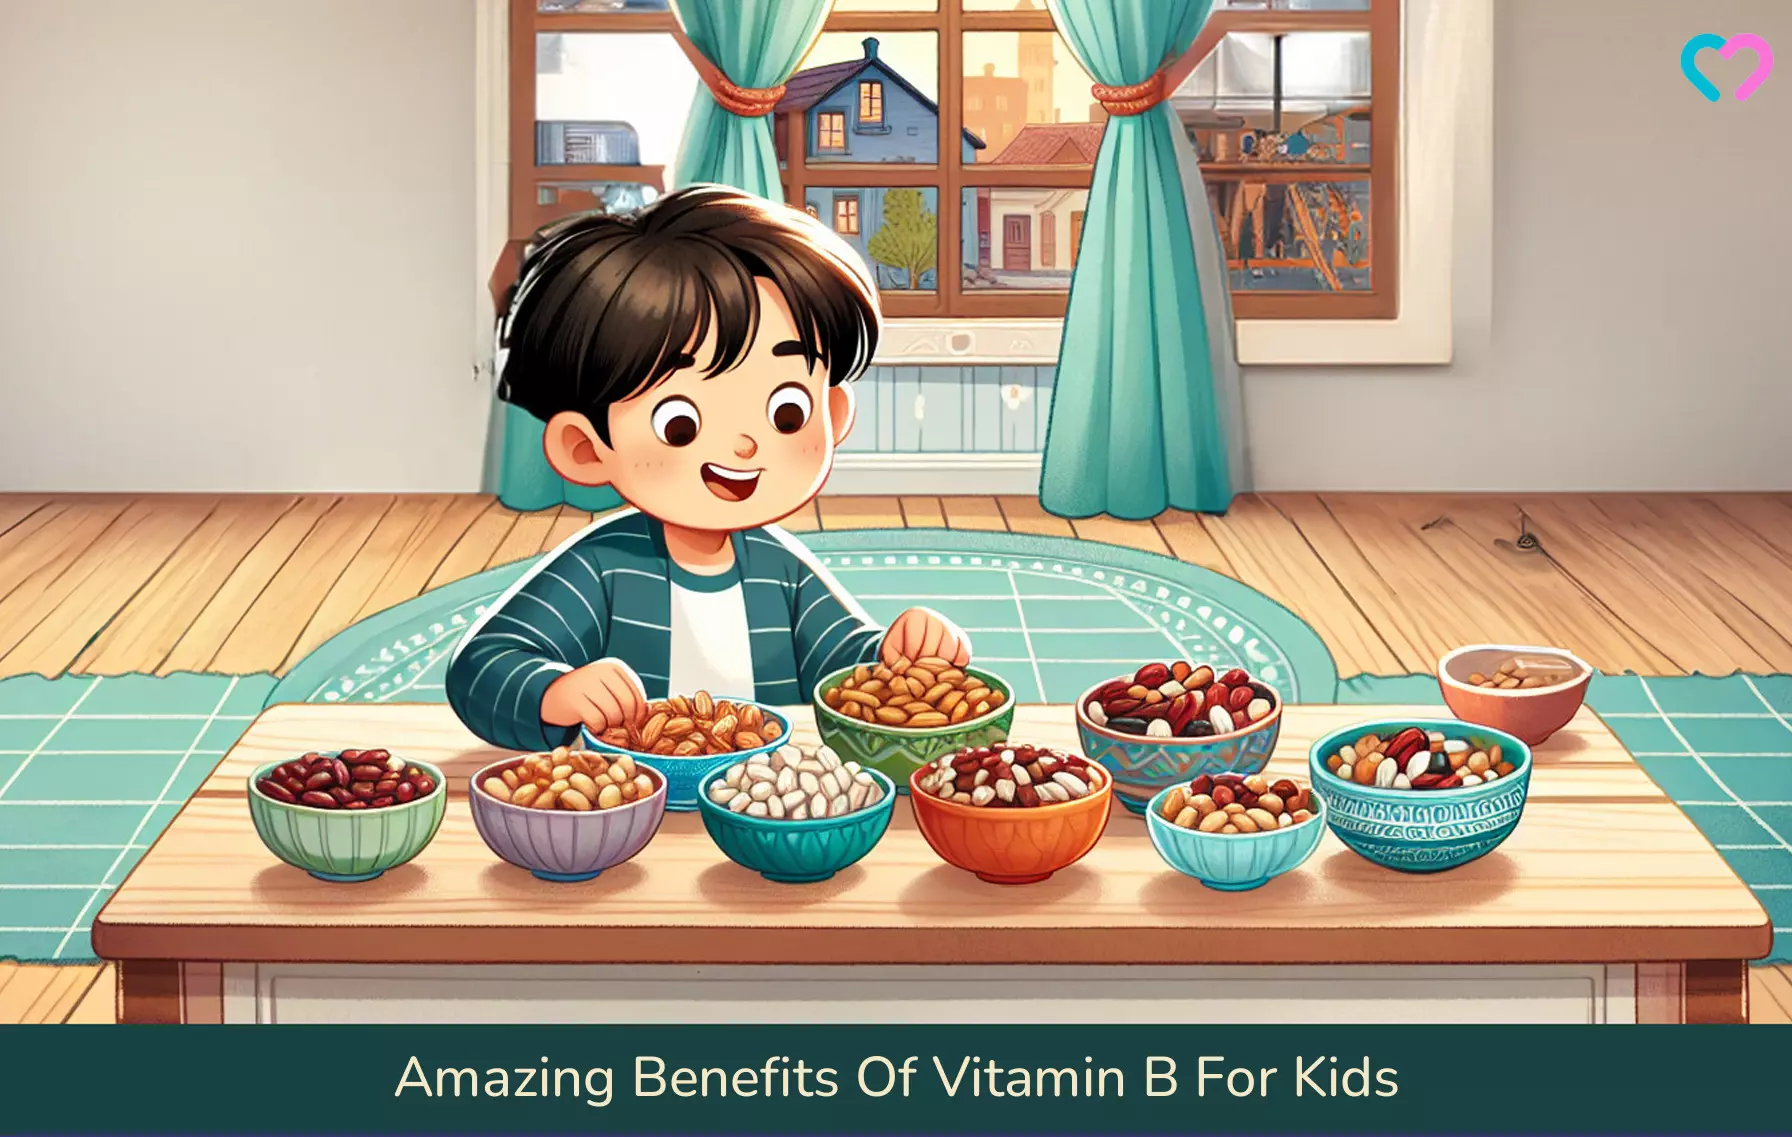 Vitamin B For Kids_illustration